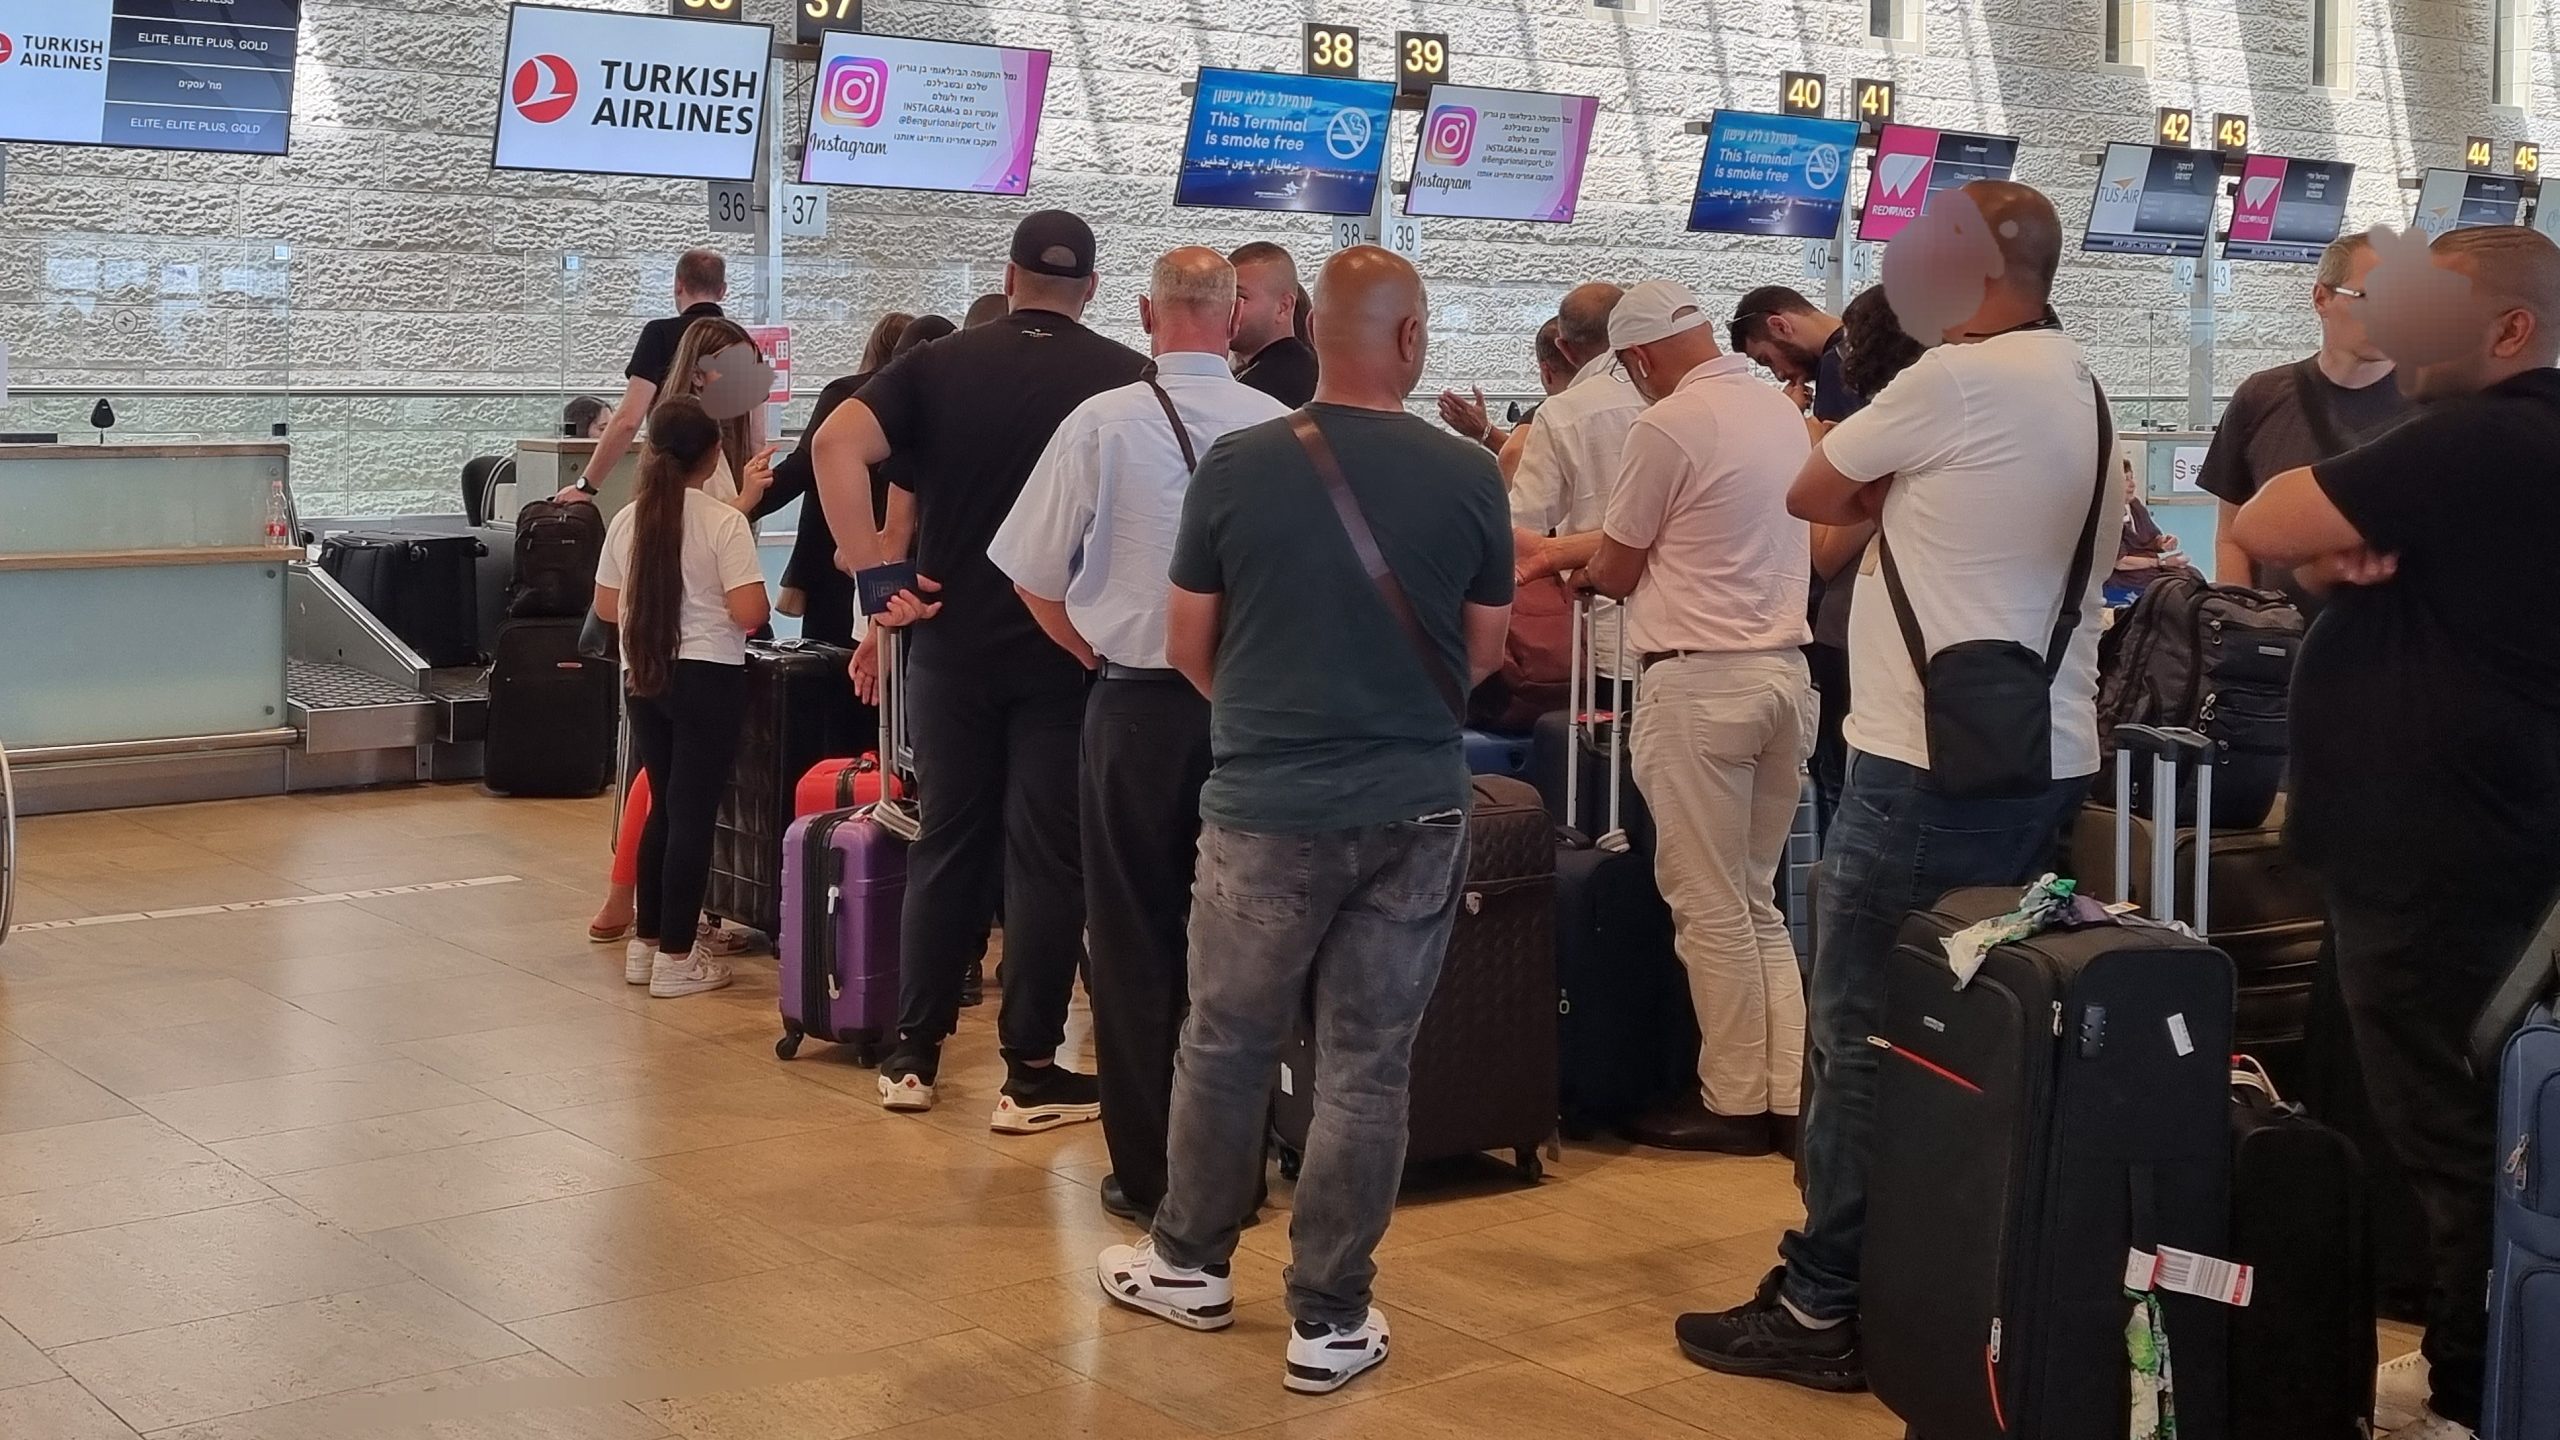 ‘I’m Not Afraid of Anything’: Israelis Traveling to Turkey Respond to Travel Warning